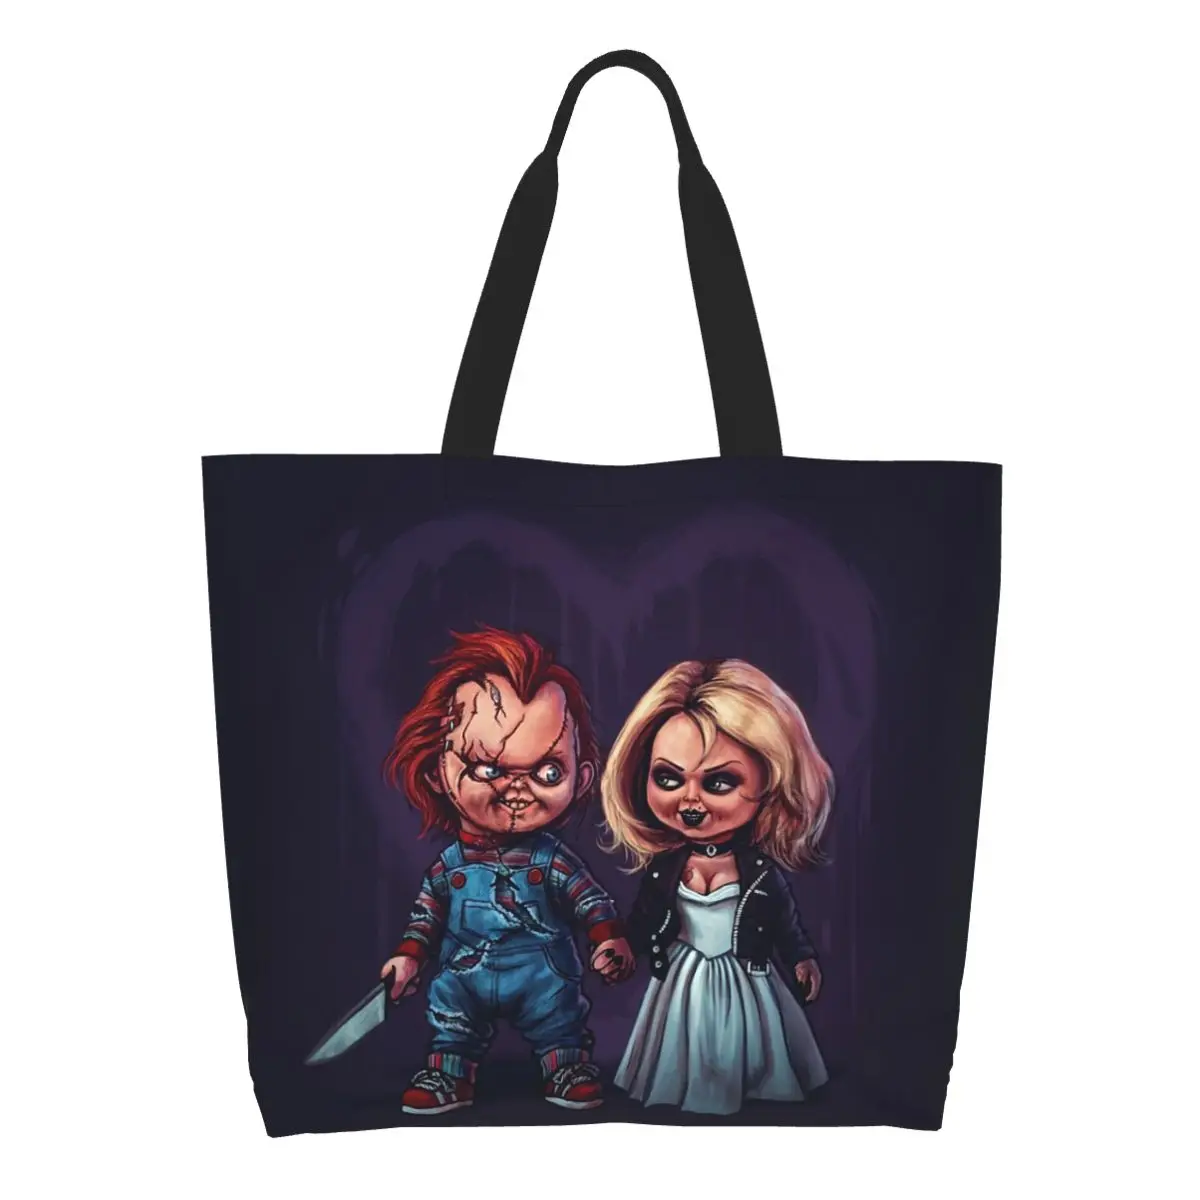 

Bride Of Chucky Grocery Shopping Tote Bag Women Horror Movie Childs Play Canvas Shopper Shoulder Bag Big Capacity Handbag